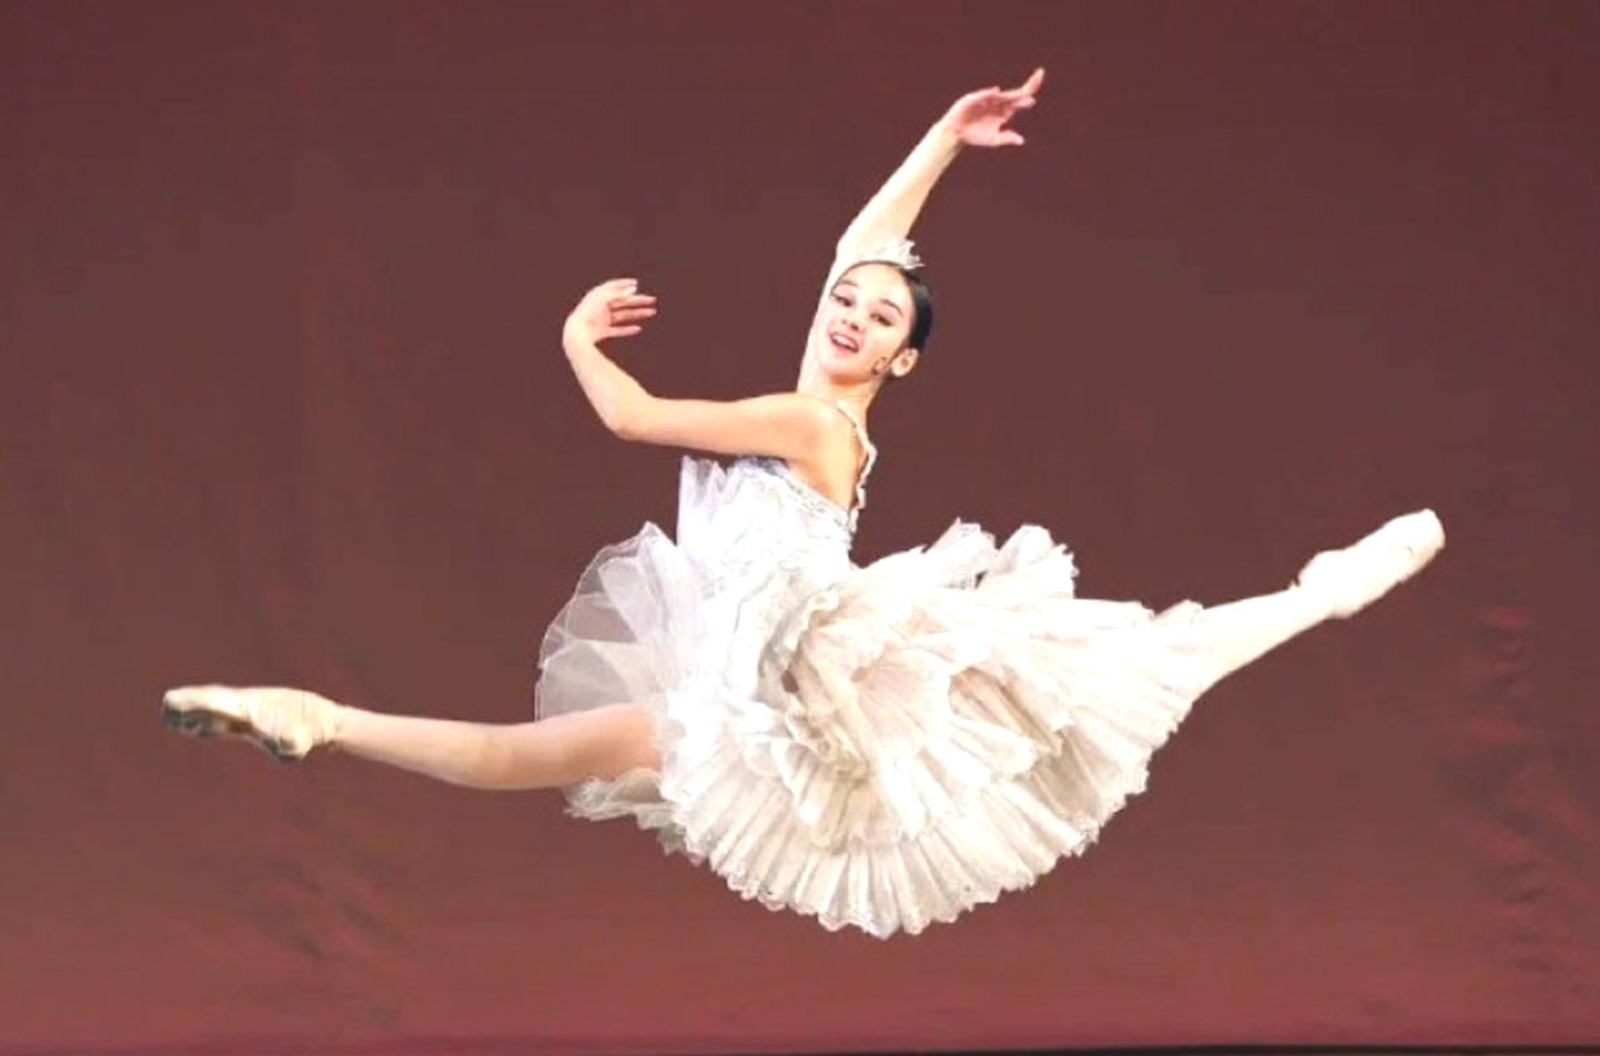 Юная балерина Камила Султангареева из Башкирии победила на конкурсе «Молодые дарования России»